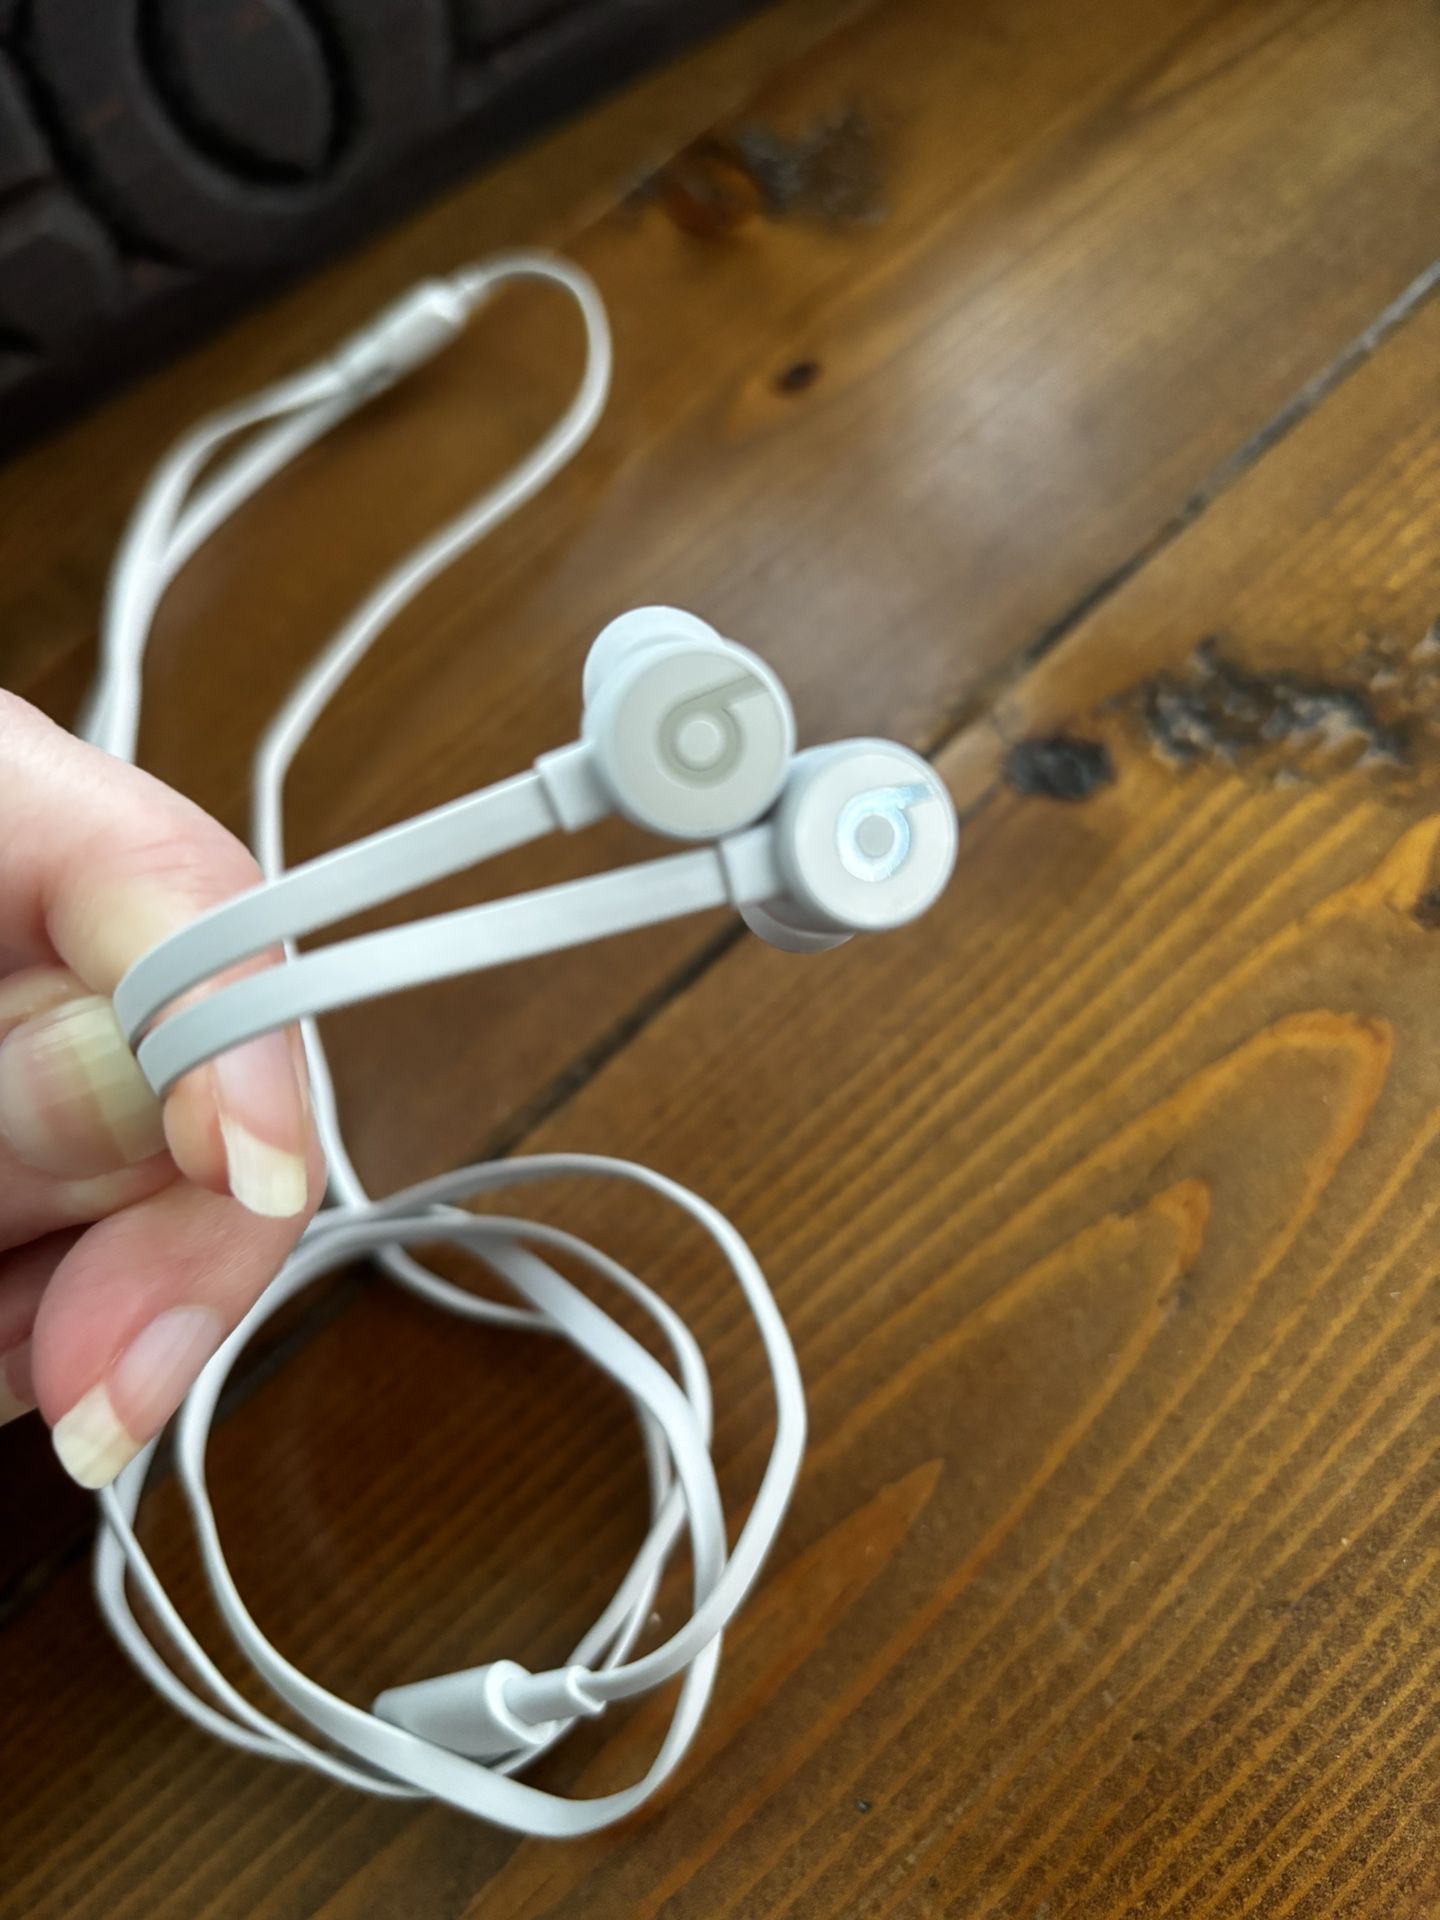 New Beats Wired Headphones 